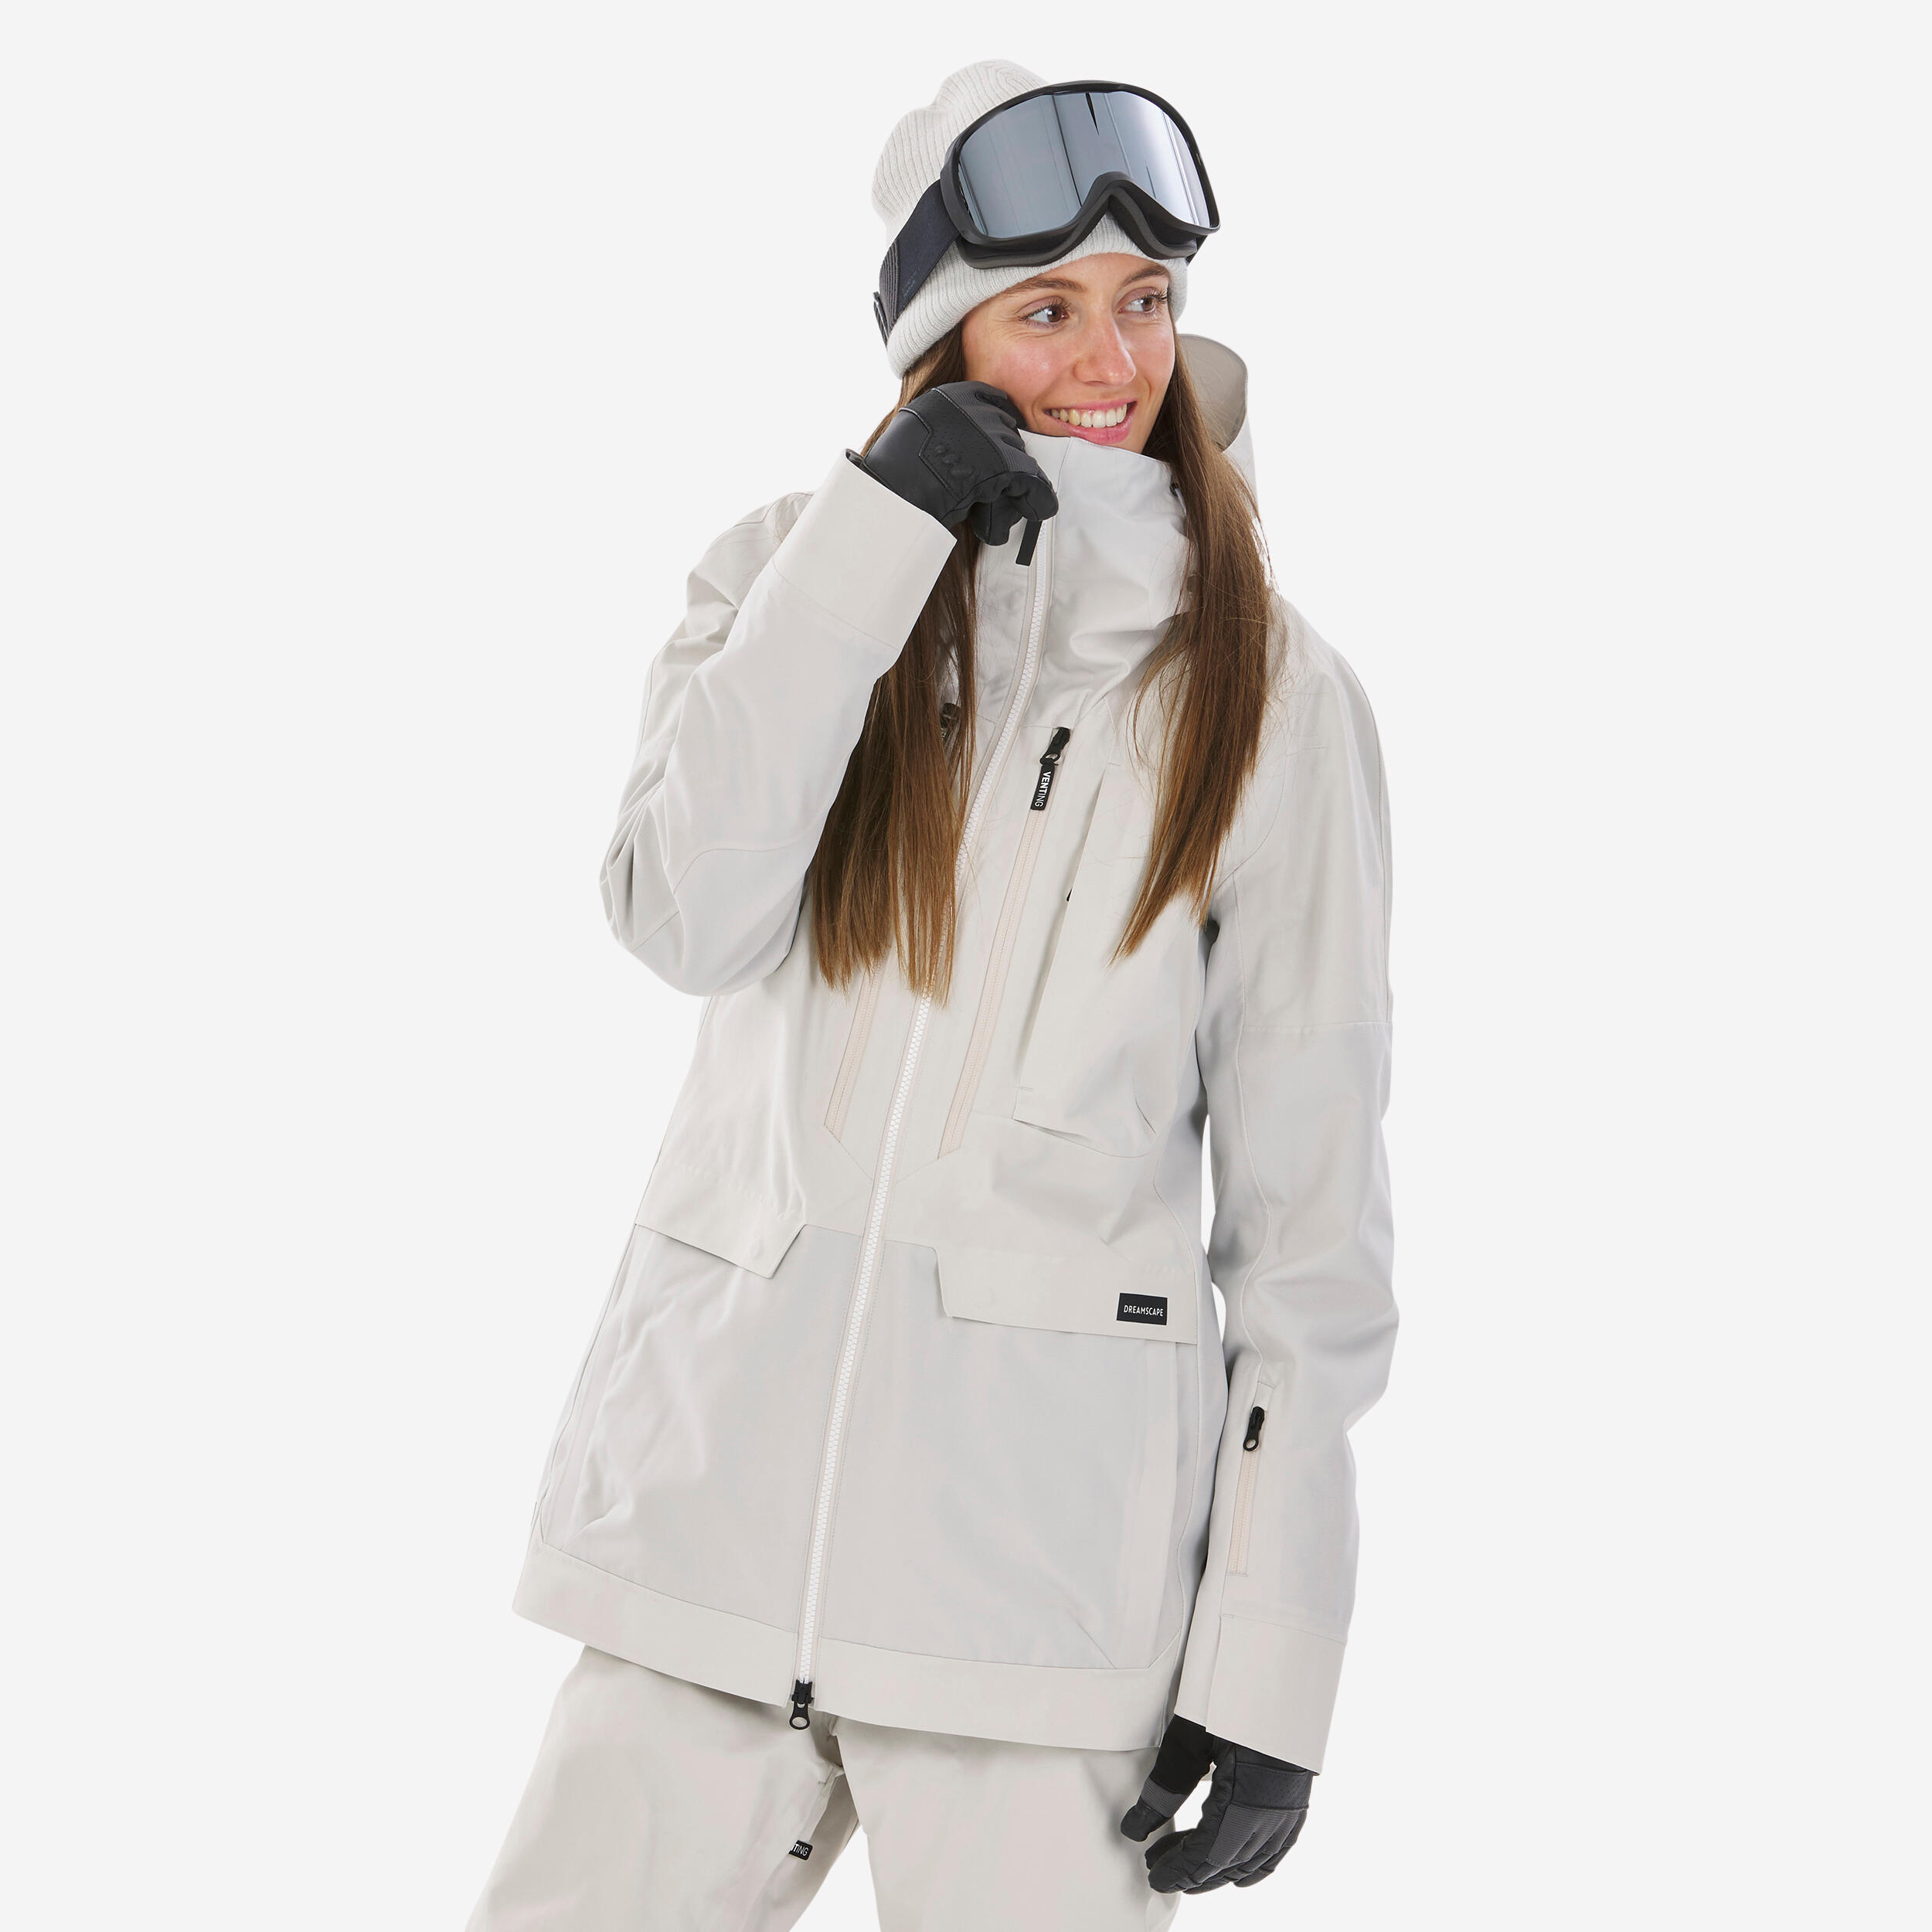 Ski & Snowboarding Gear - Winter Clothes